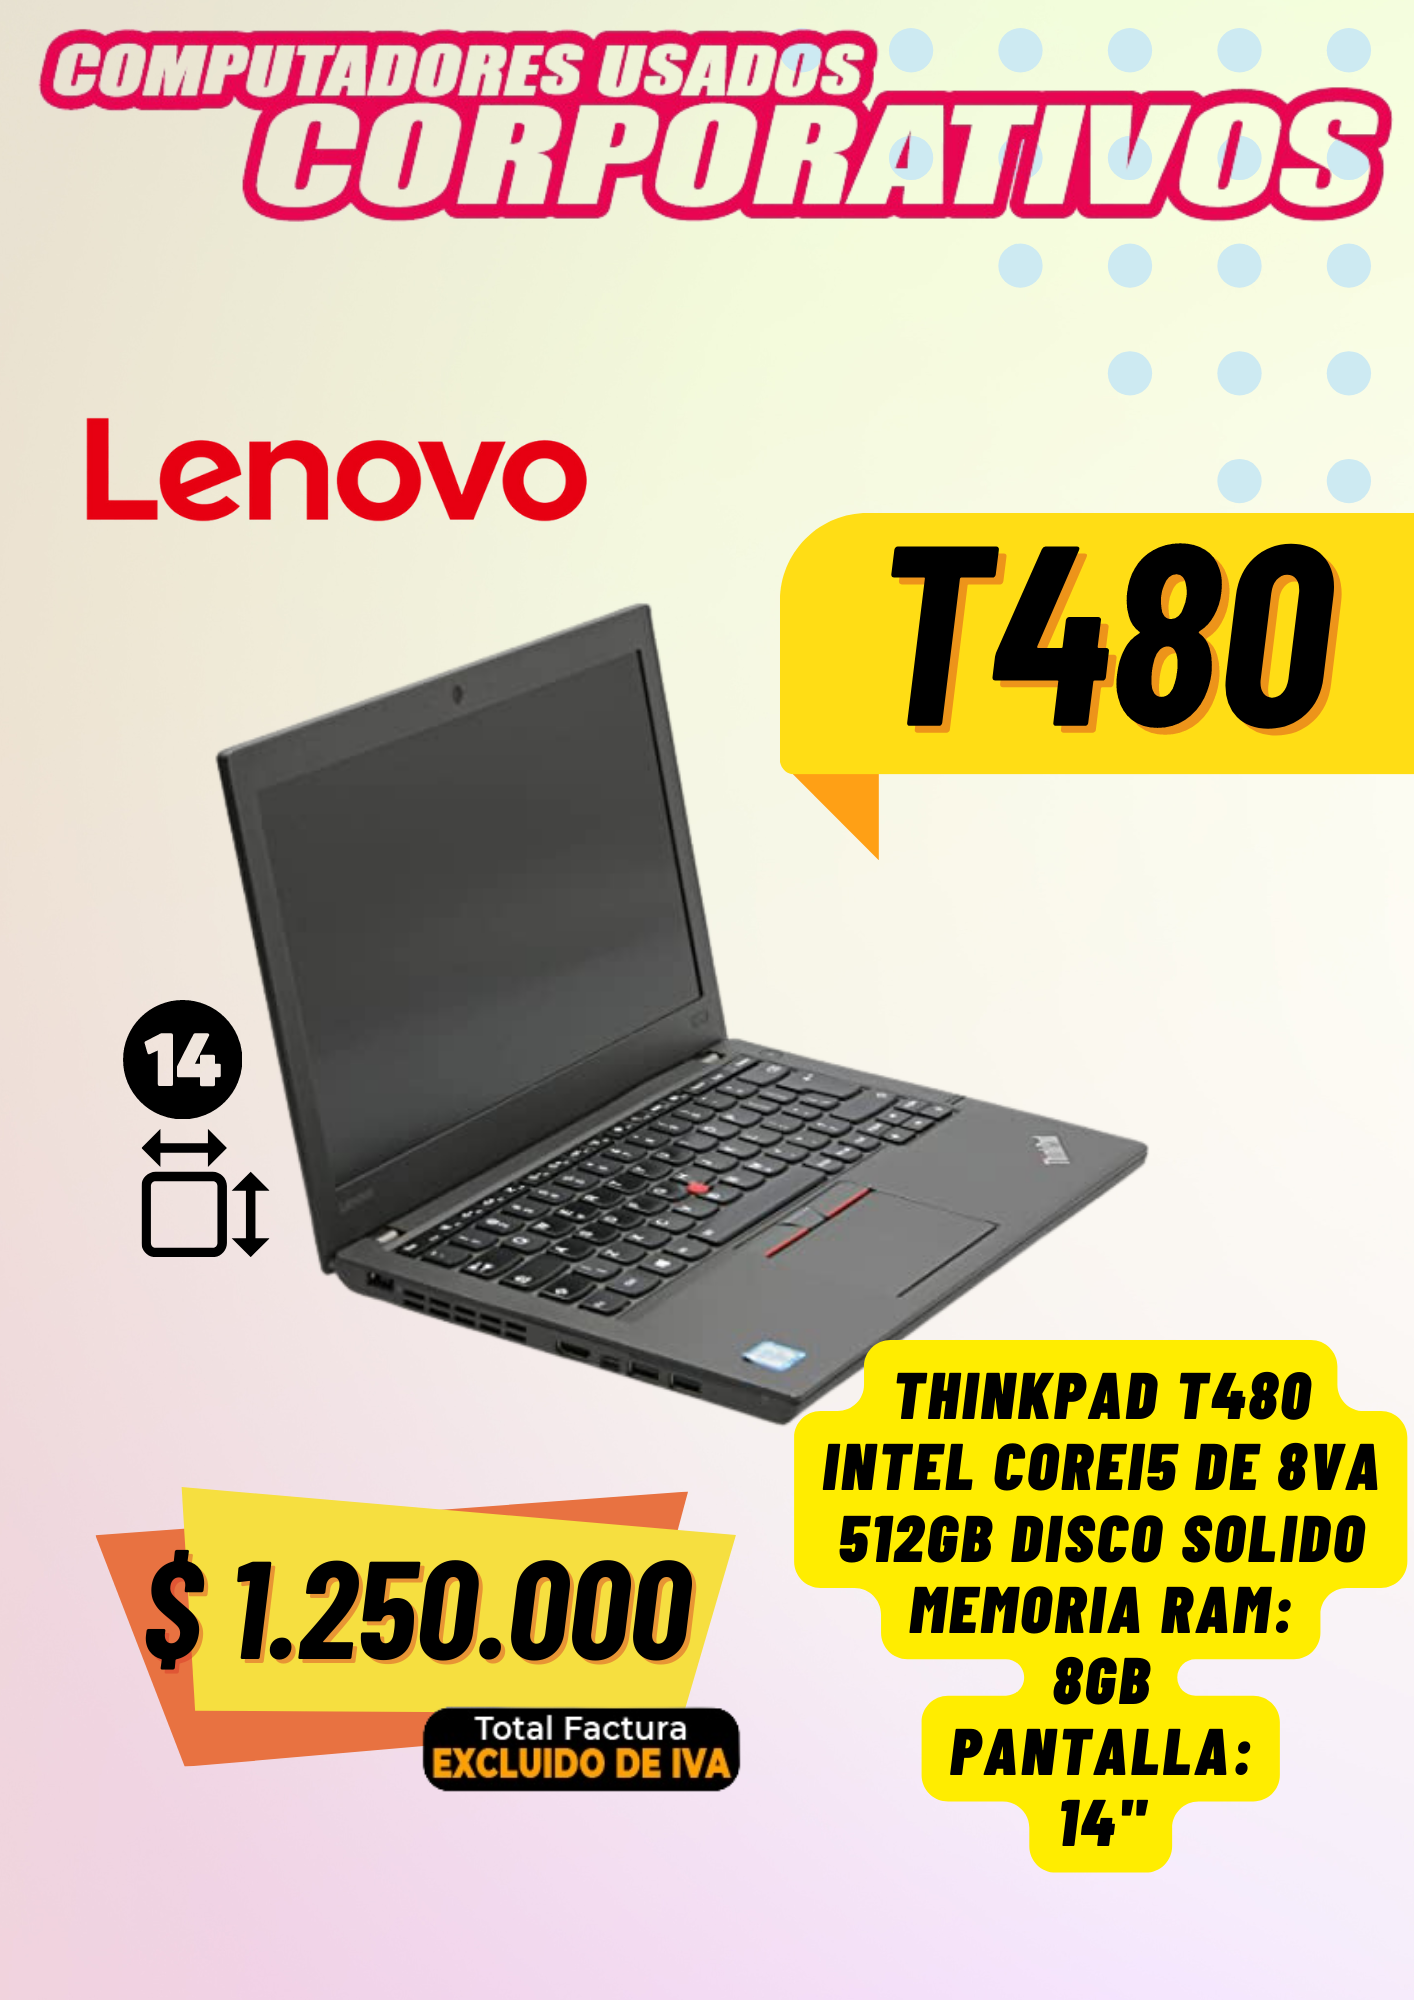 Lenovo T480